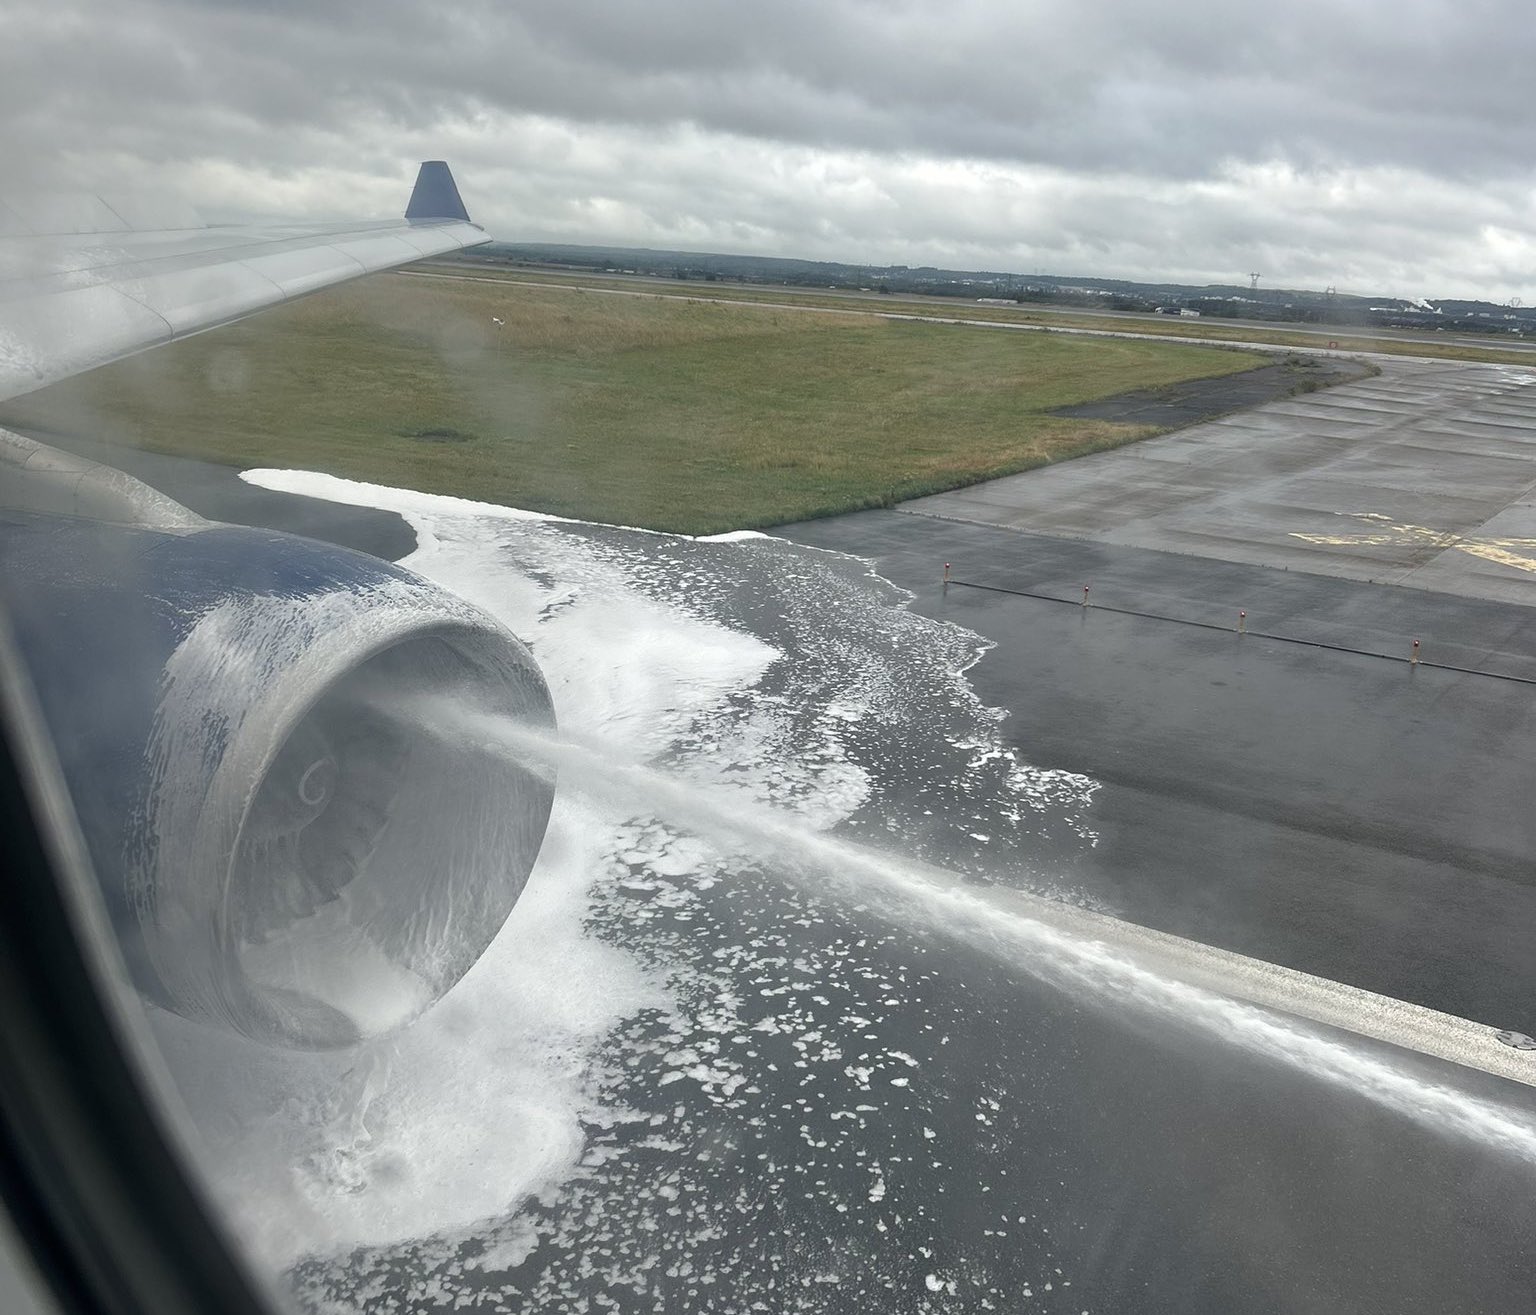 jet engine spraying water on a runway